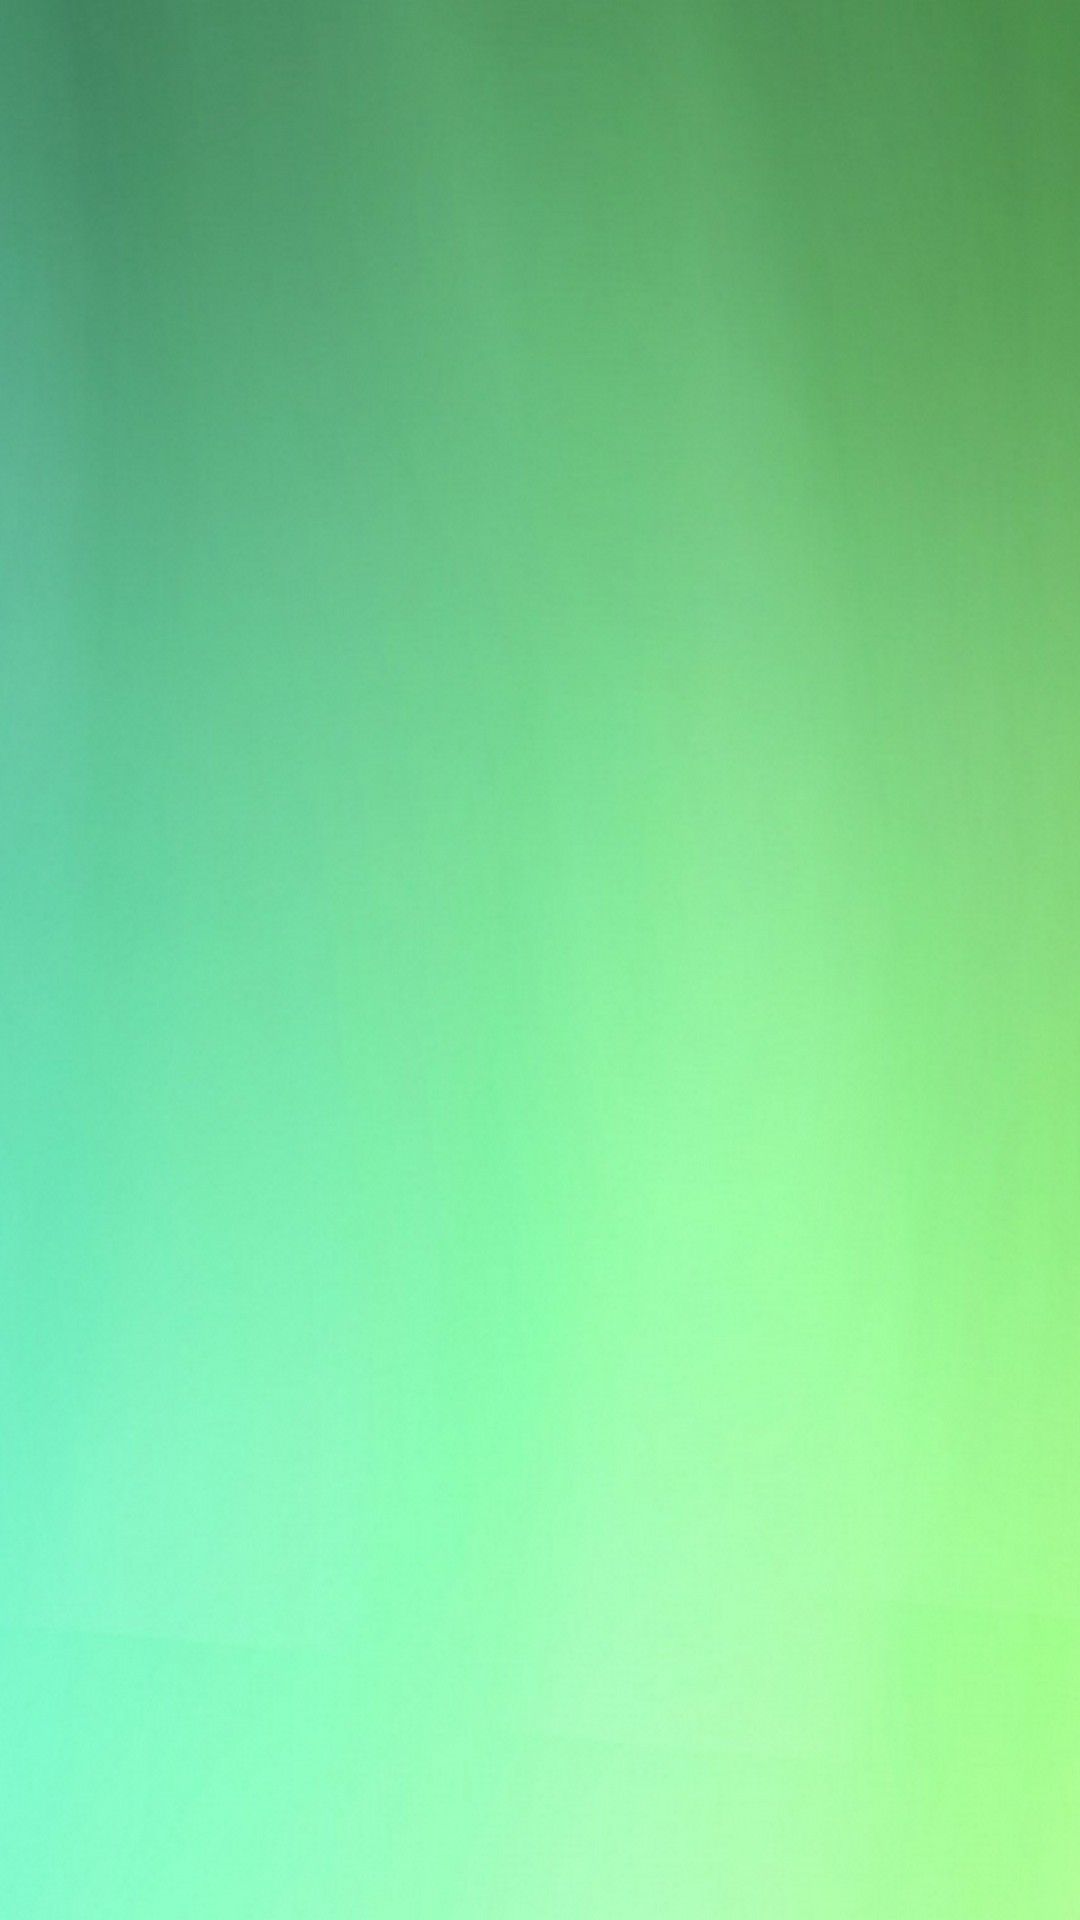 Light Green Wallpaper Android